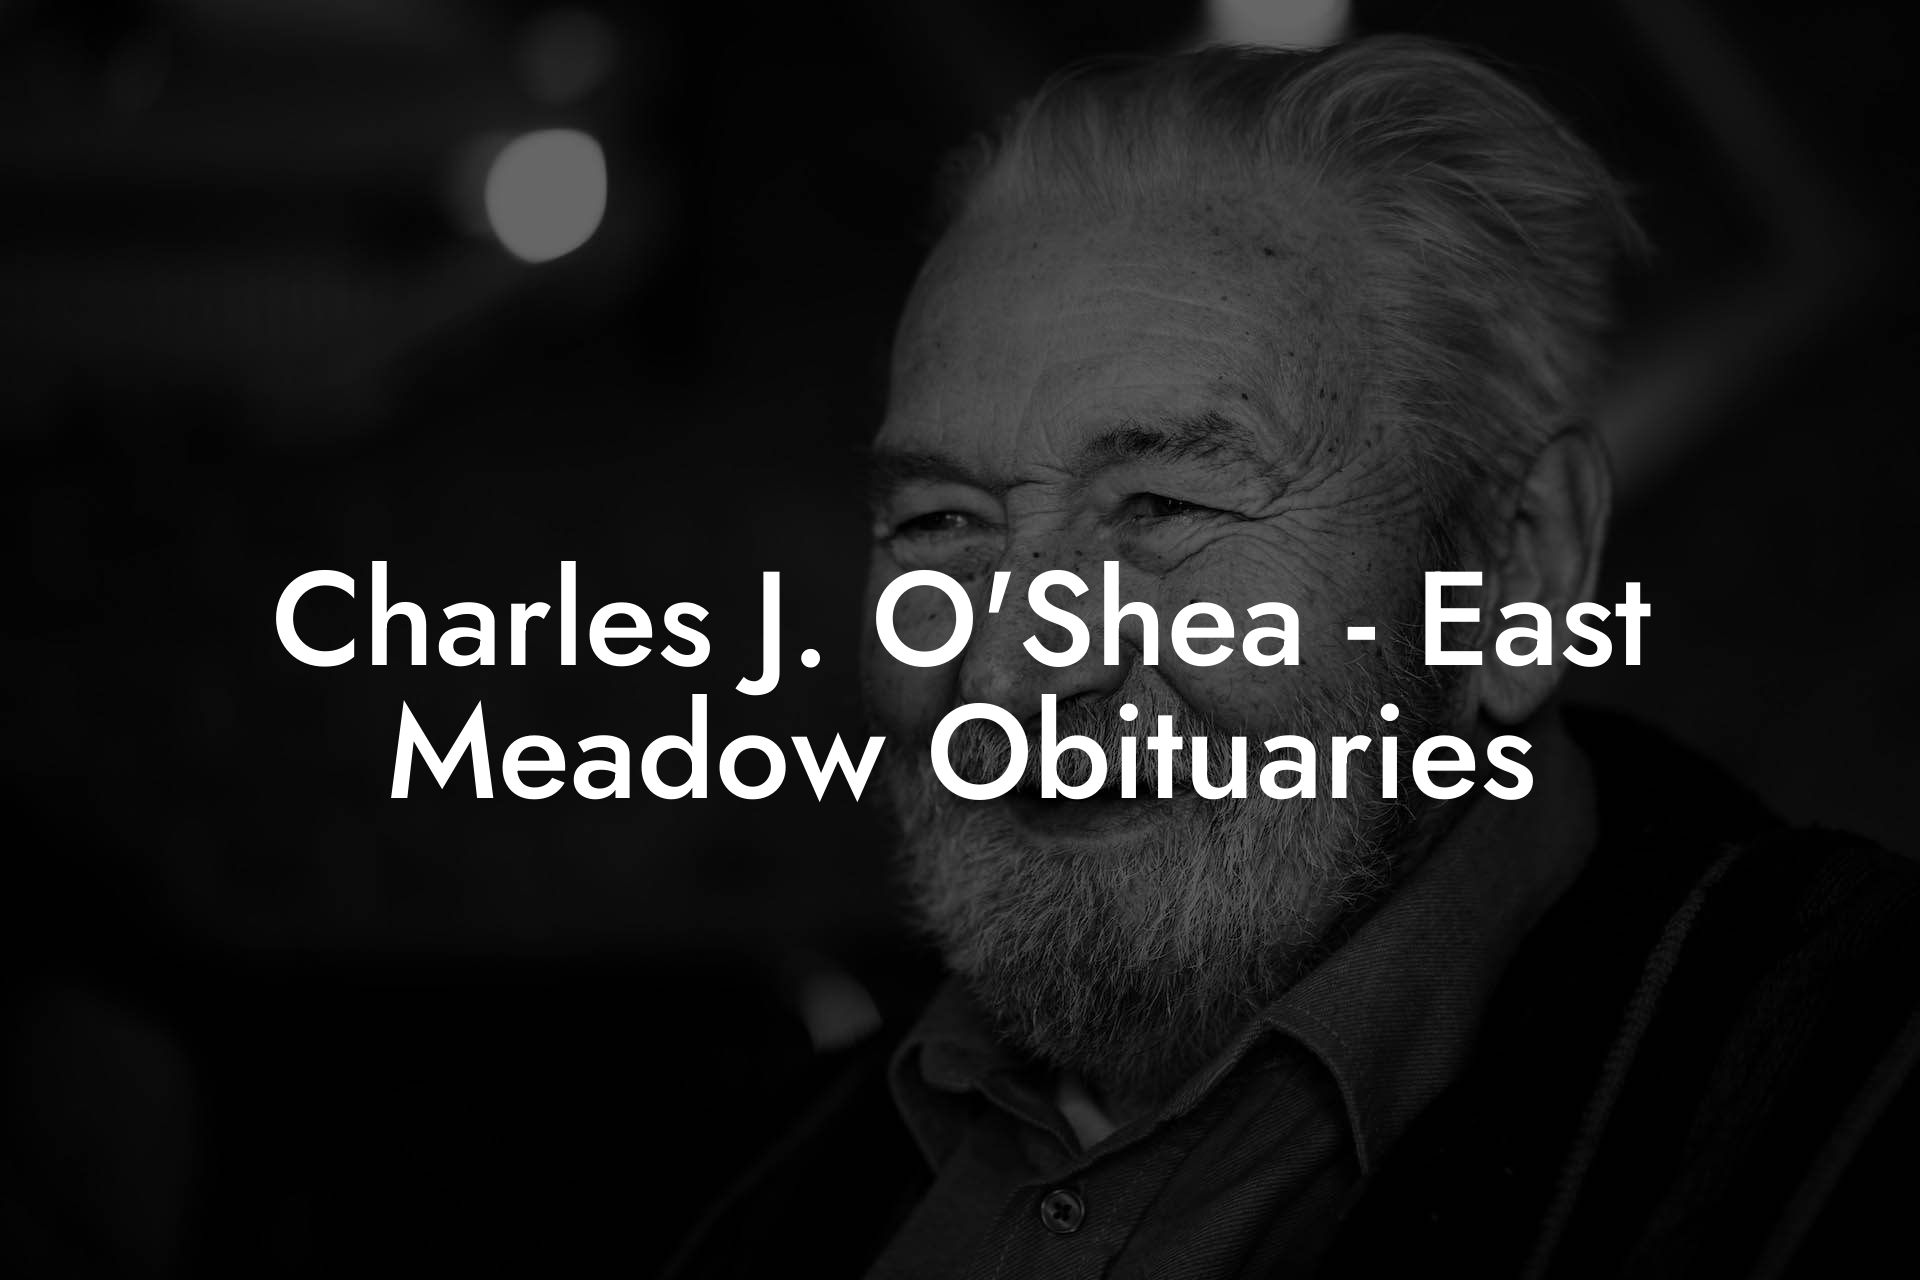 Charles J. O'Shea - East Meadow Obituaries